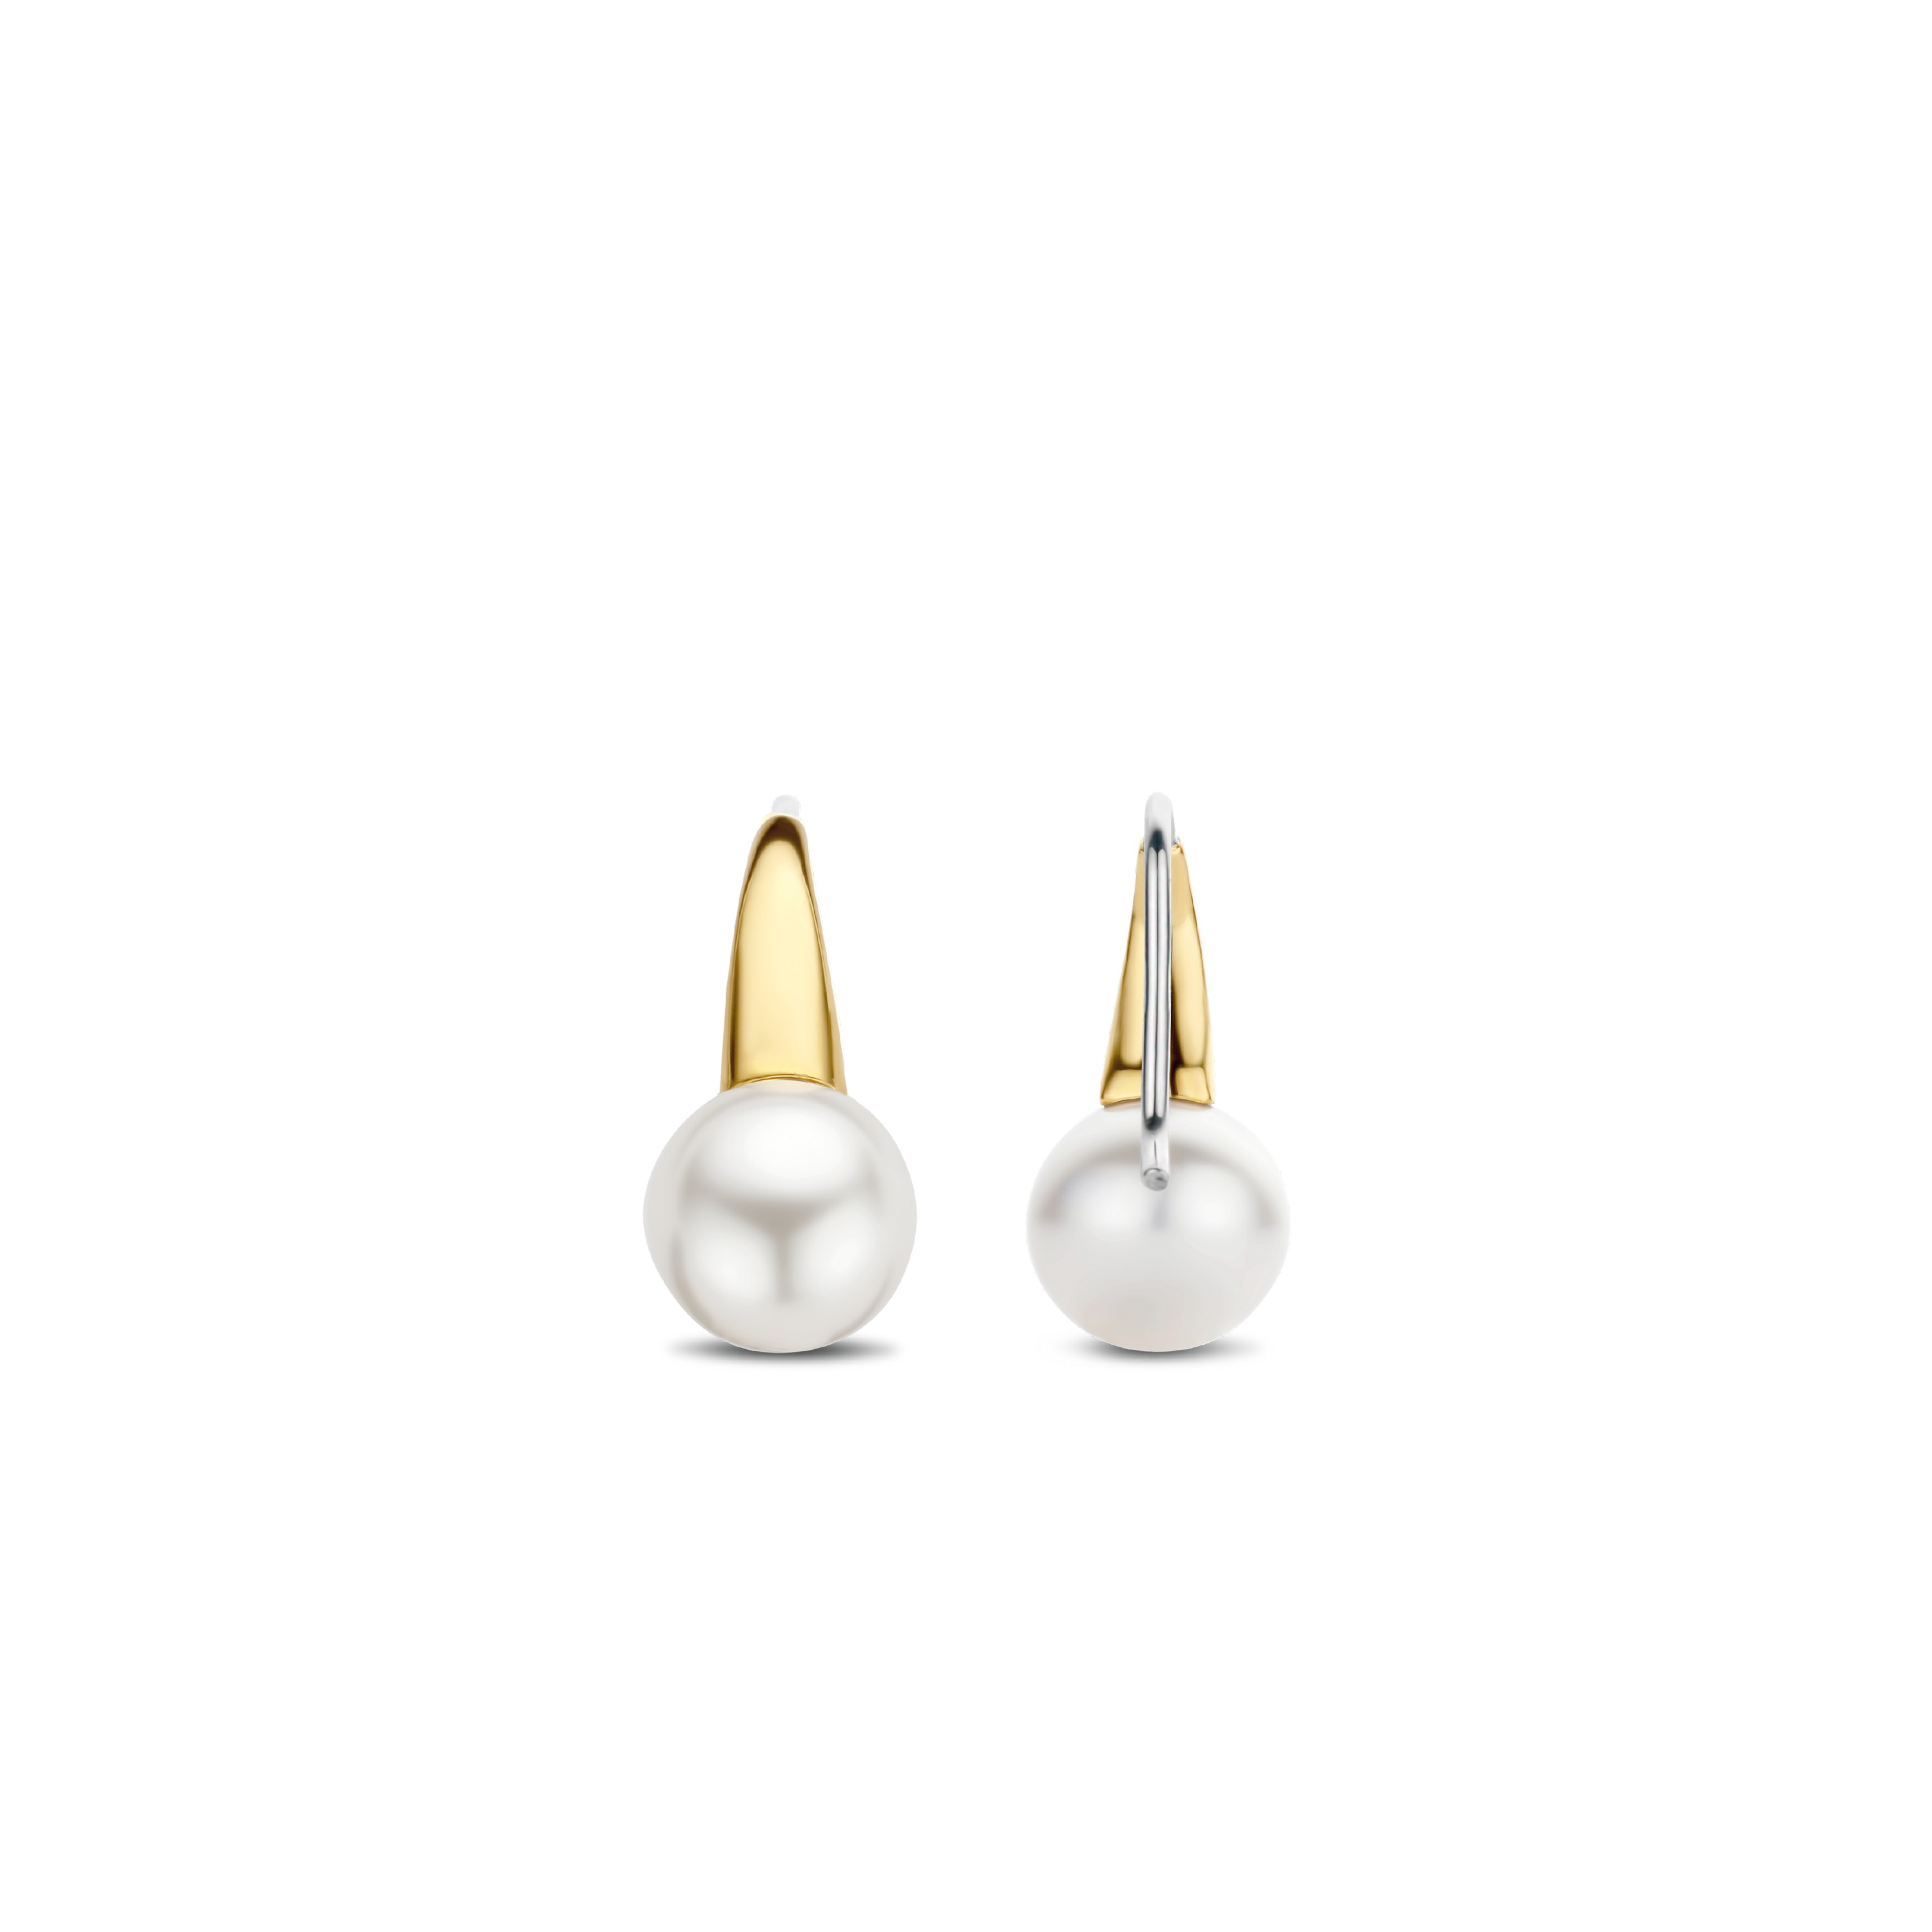 TI SENTO - Milano Earrings 7849PW Image 3 Gala Jewelers Inc. White Oak, PA